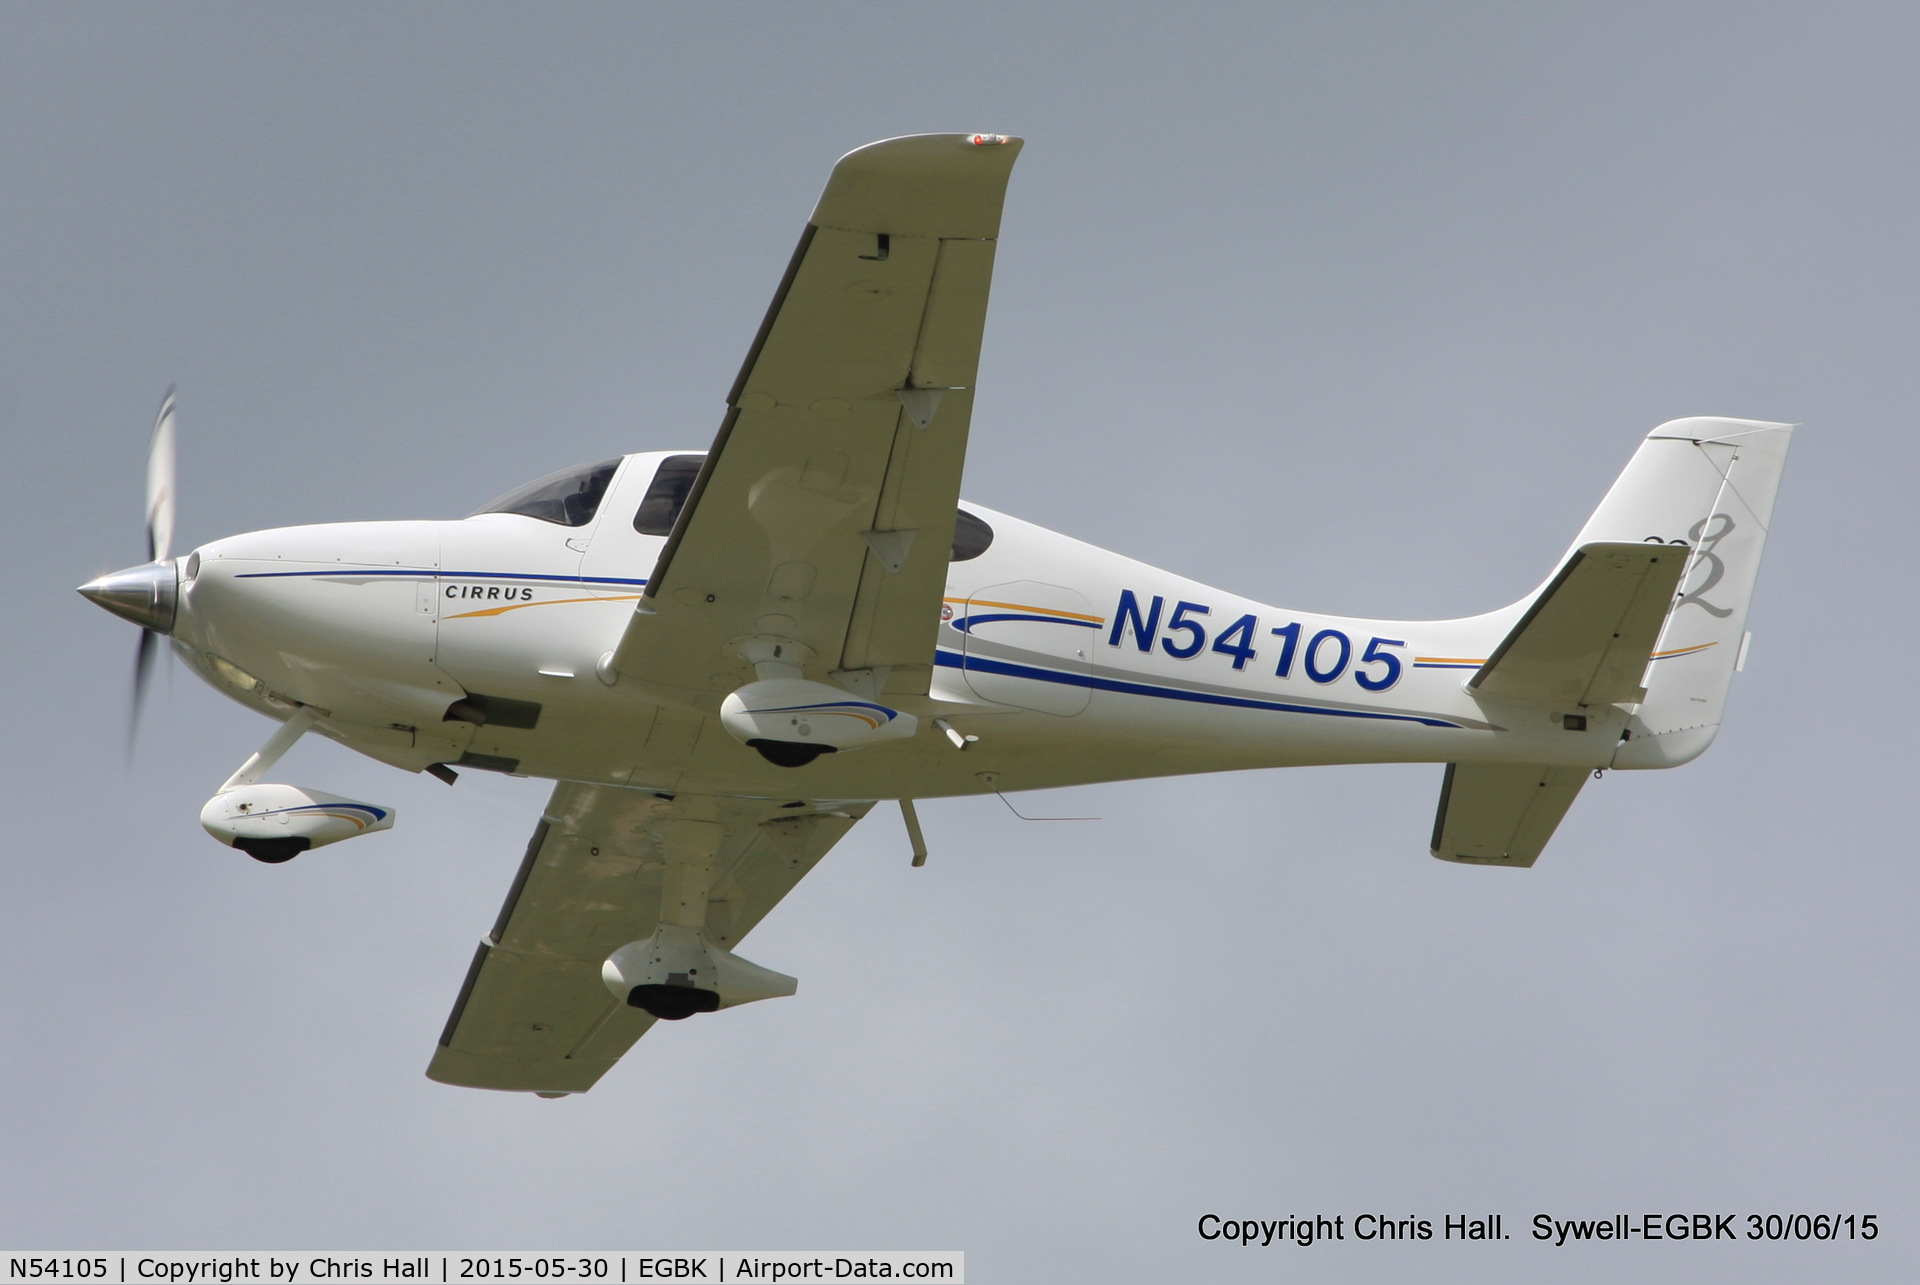 N54105, 2004 Cirrus SR22 G2 C/N 1139, at Aeroexpo 2015